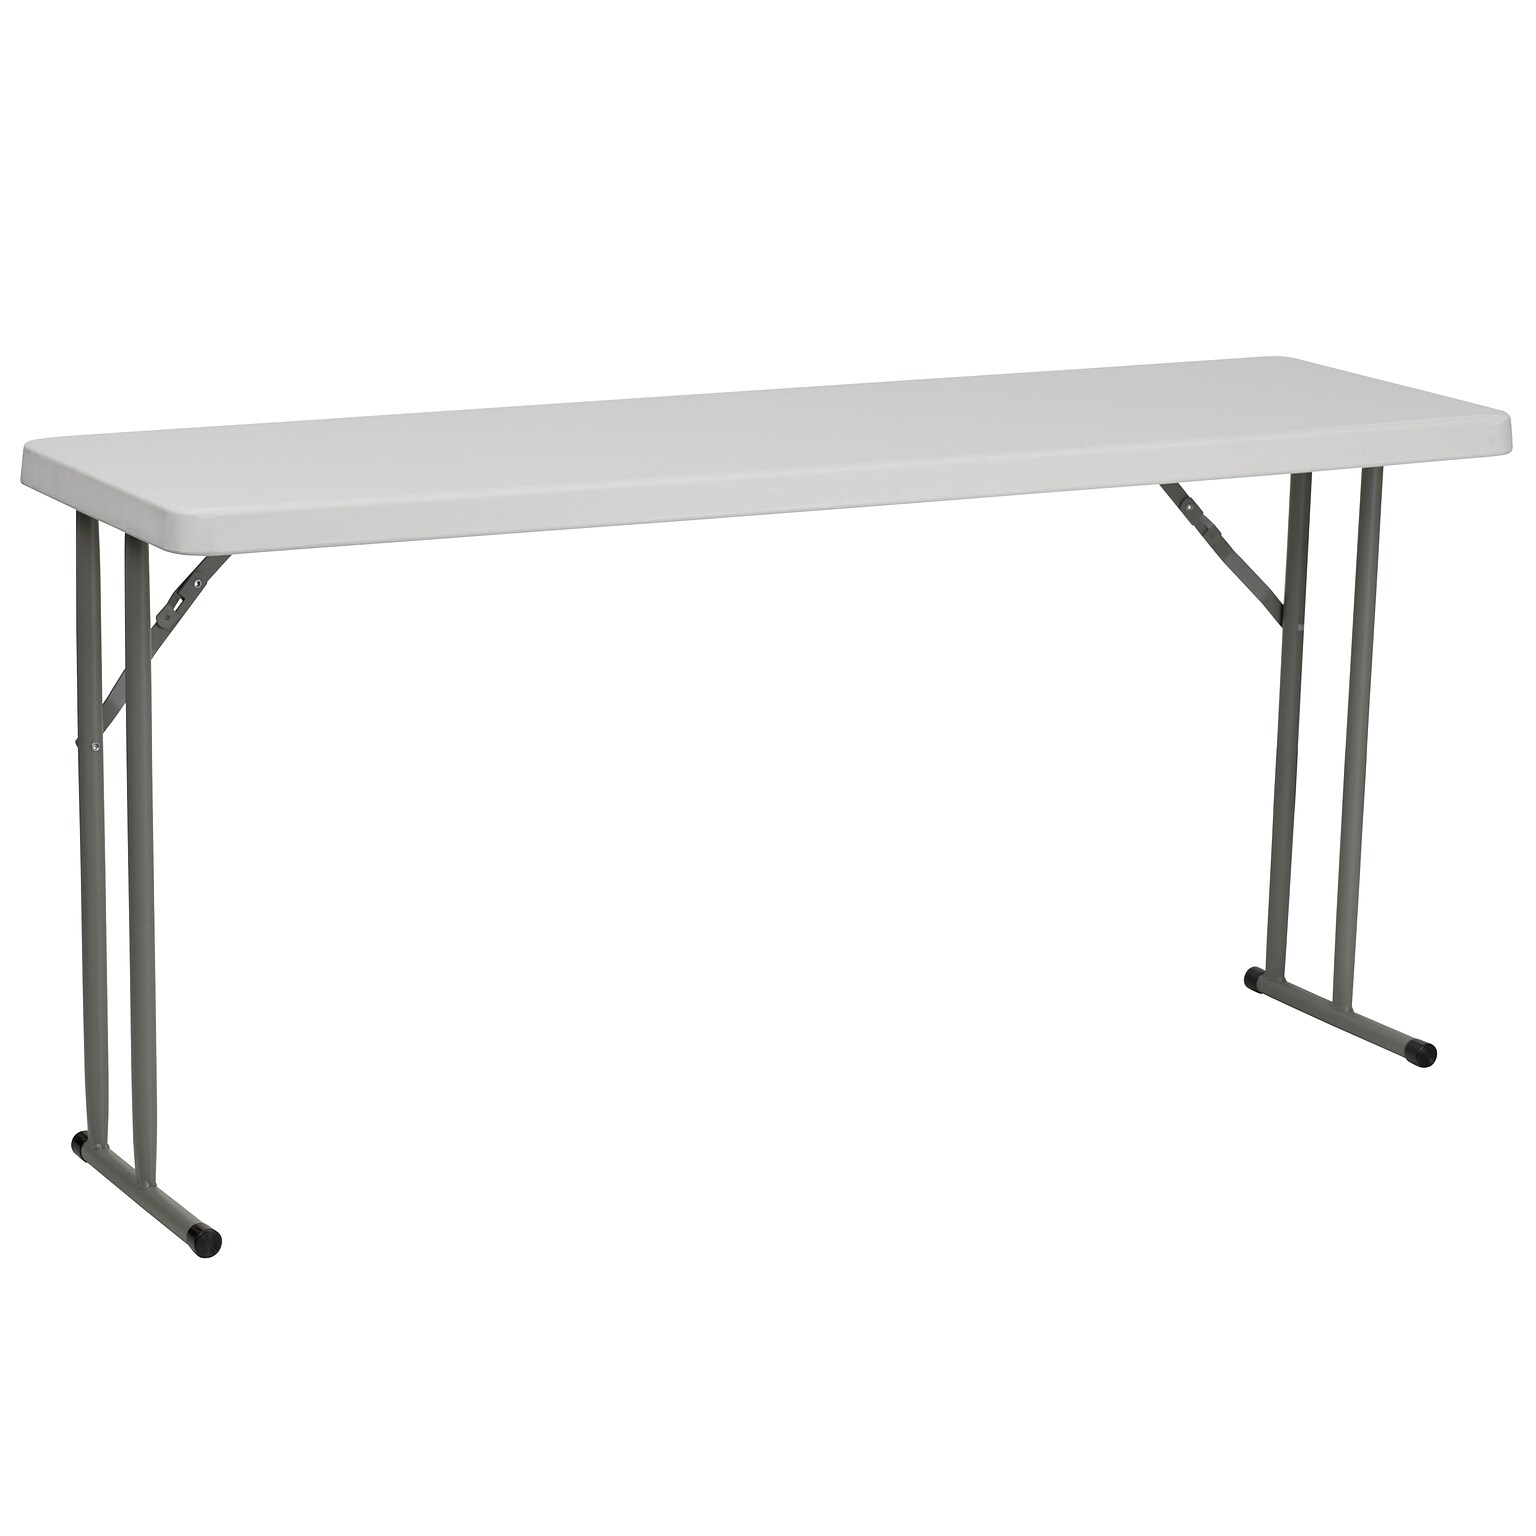 Flash Furniture Kathryn Folding Table, 60 x 18, Granite White (RB1860)